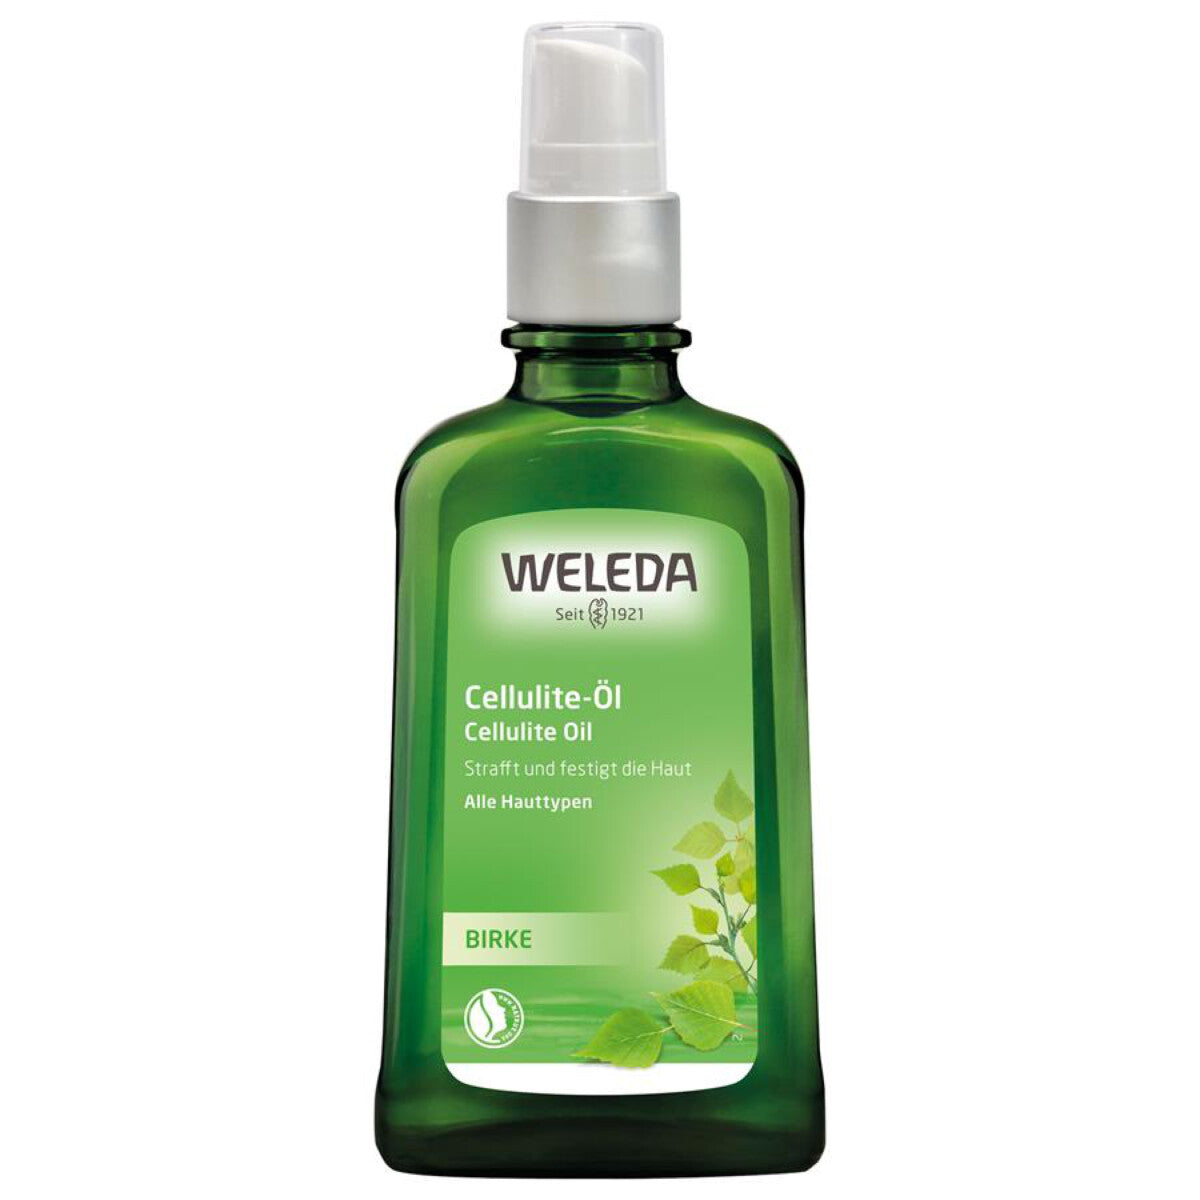 WELEDA Birke Cellulite-Öl - 100 ml